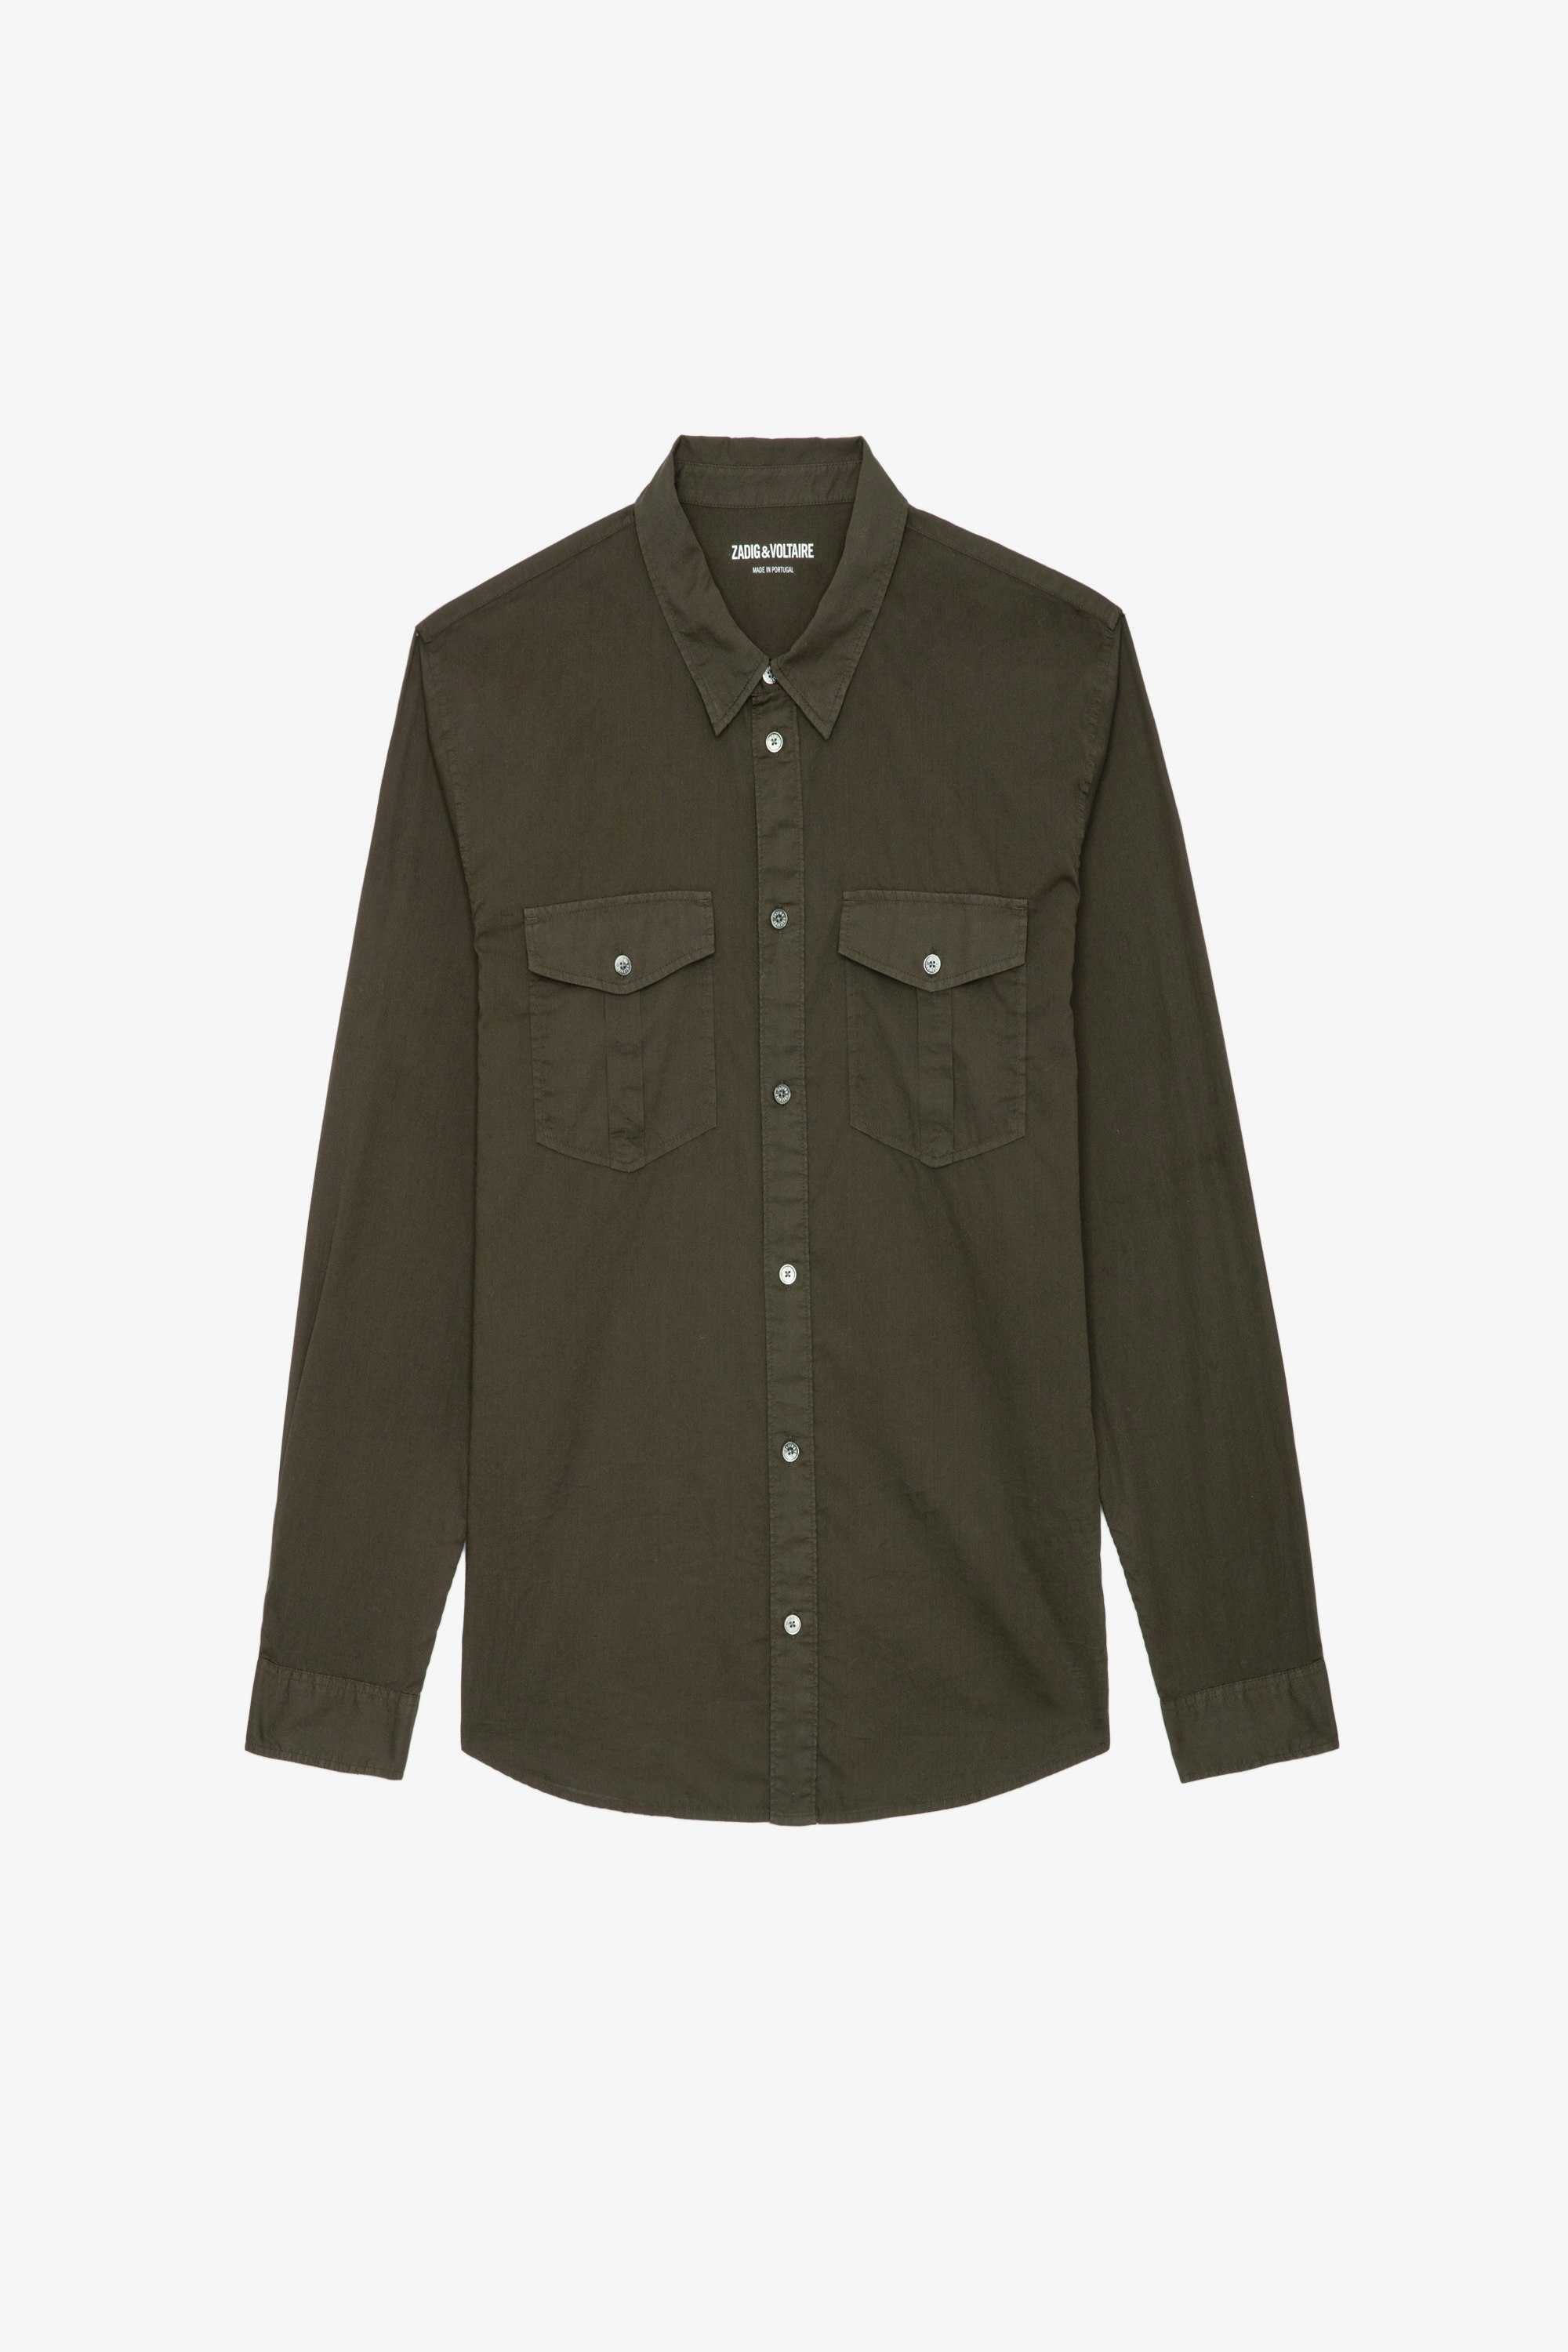 Thibault Shirt - Khaki cotton voile shirt with flap pockets.